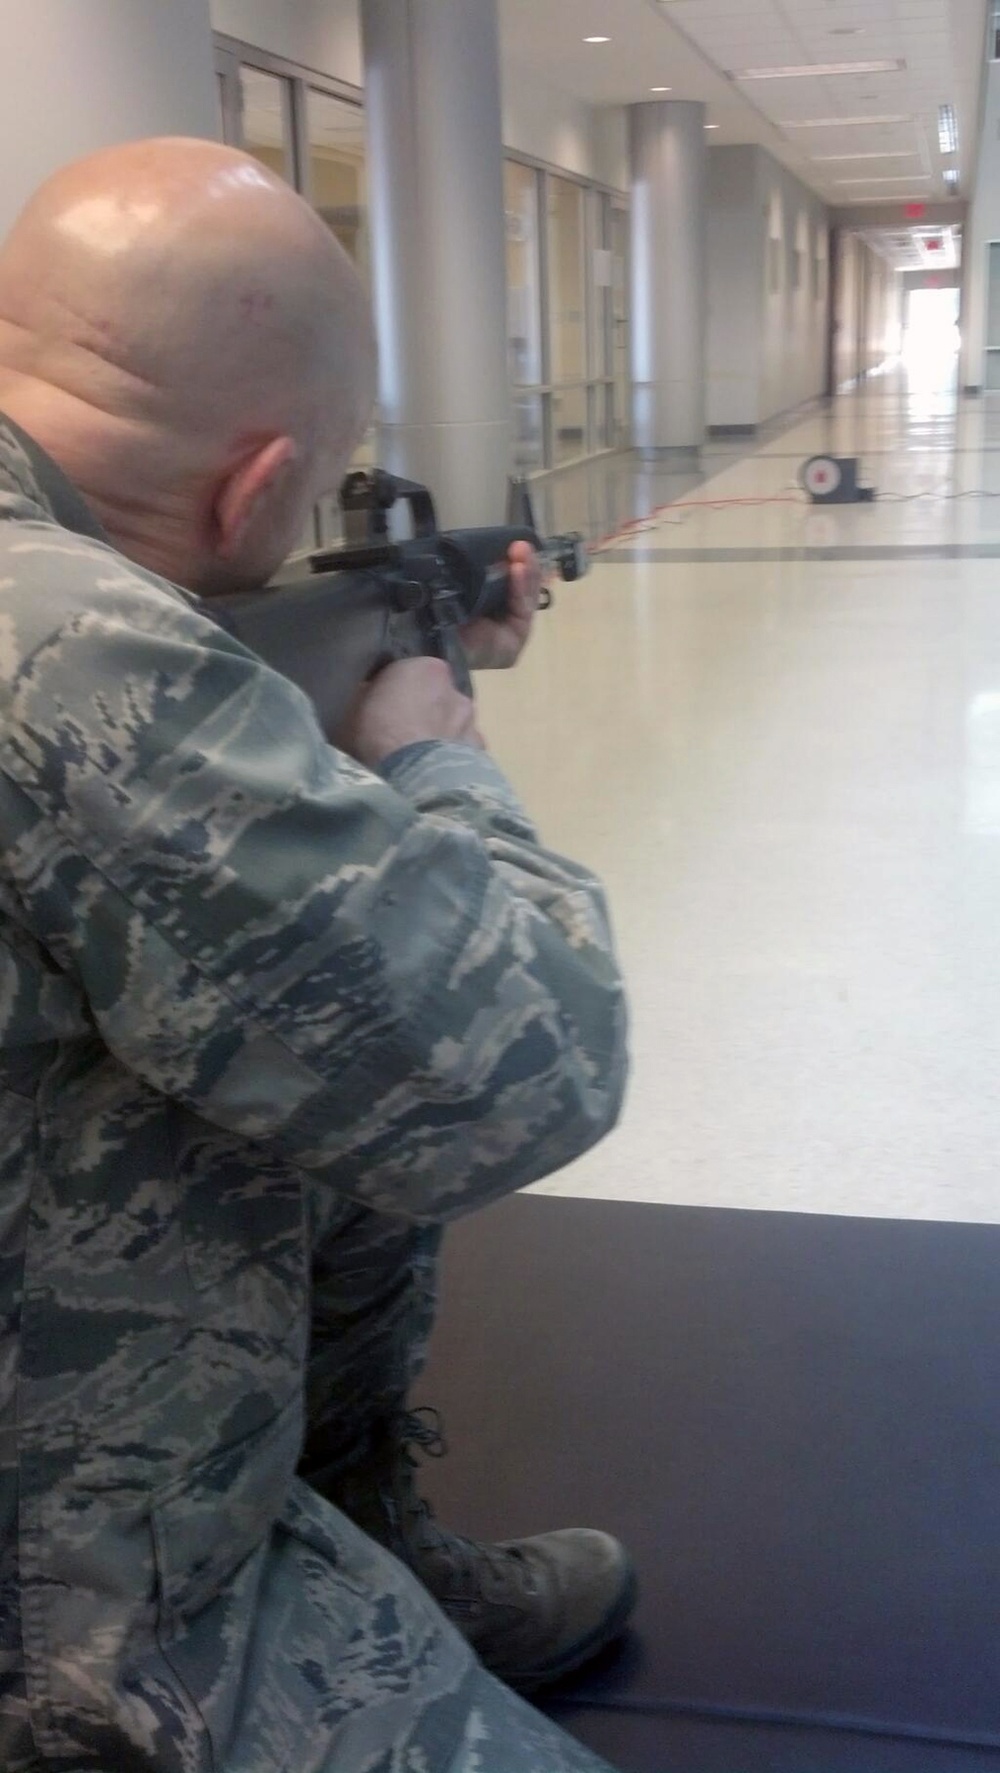 NC Guard marksmanship training